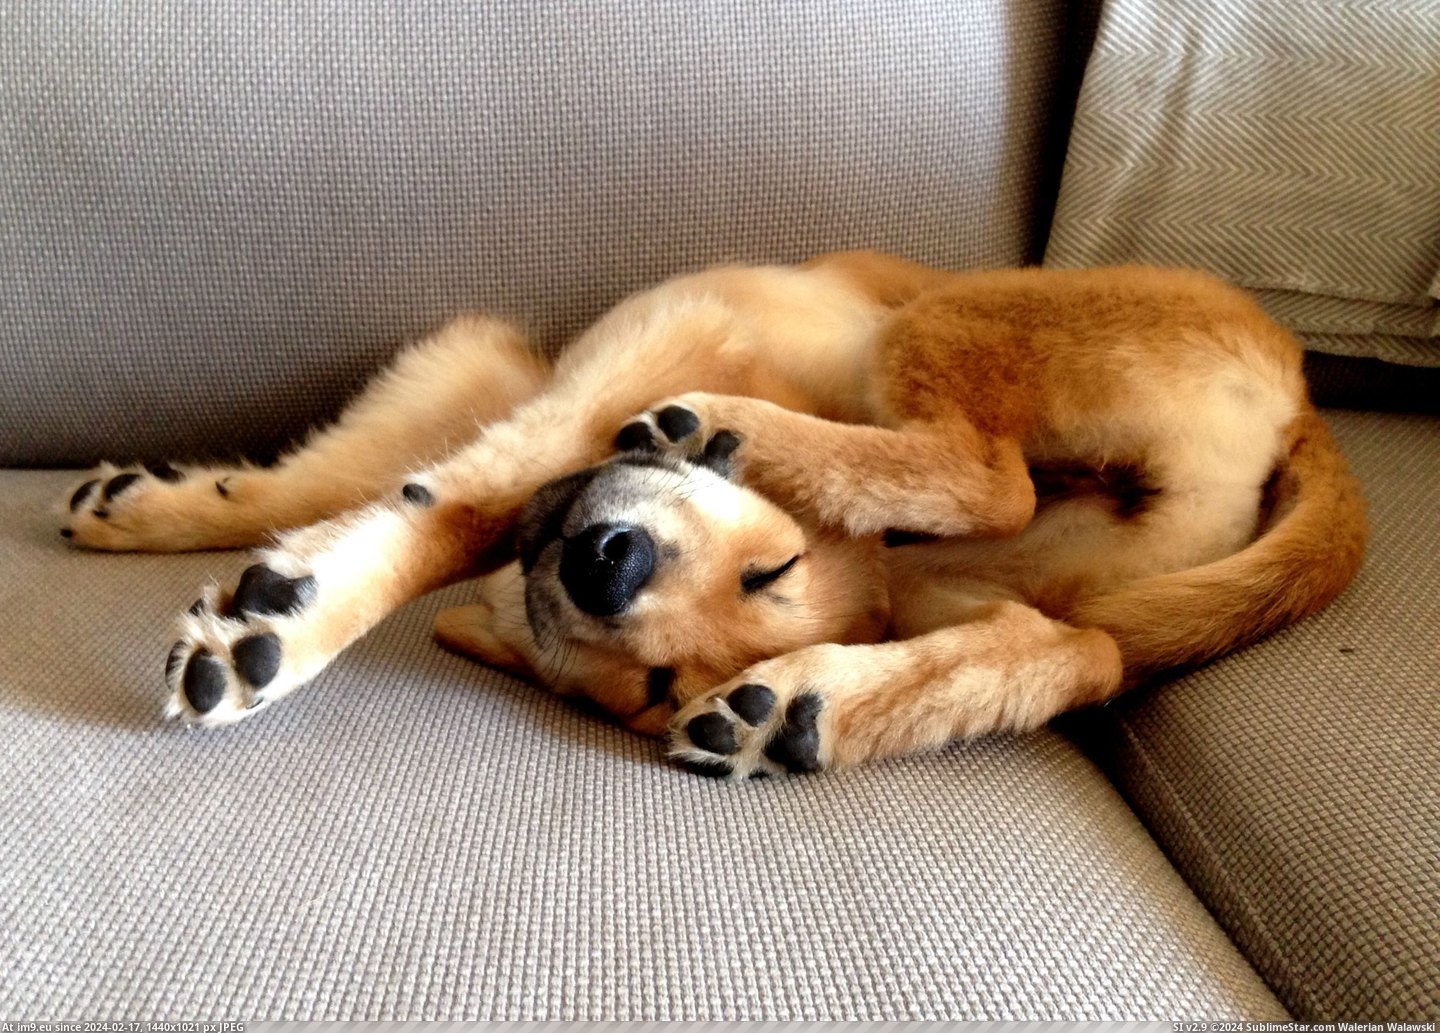 #Puppy  #Pretzel [Aww] Puppy pretzel Pic. (Image of album My r/AWW favs))